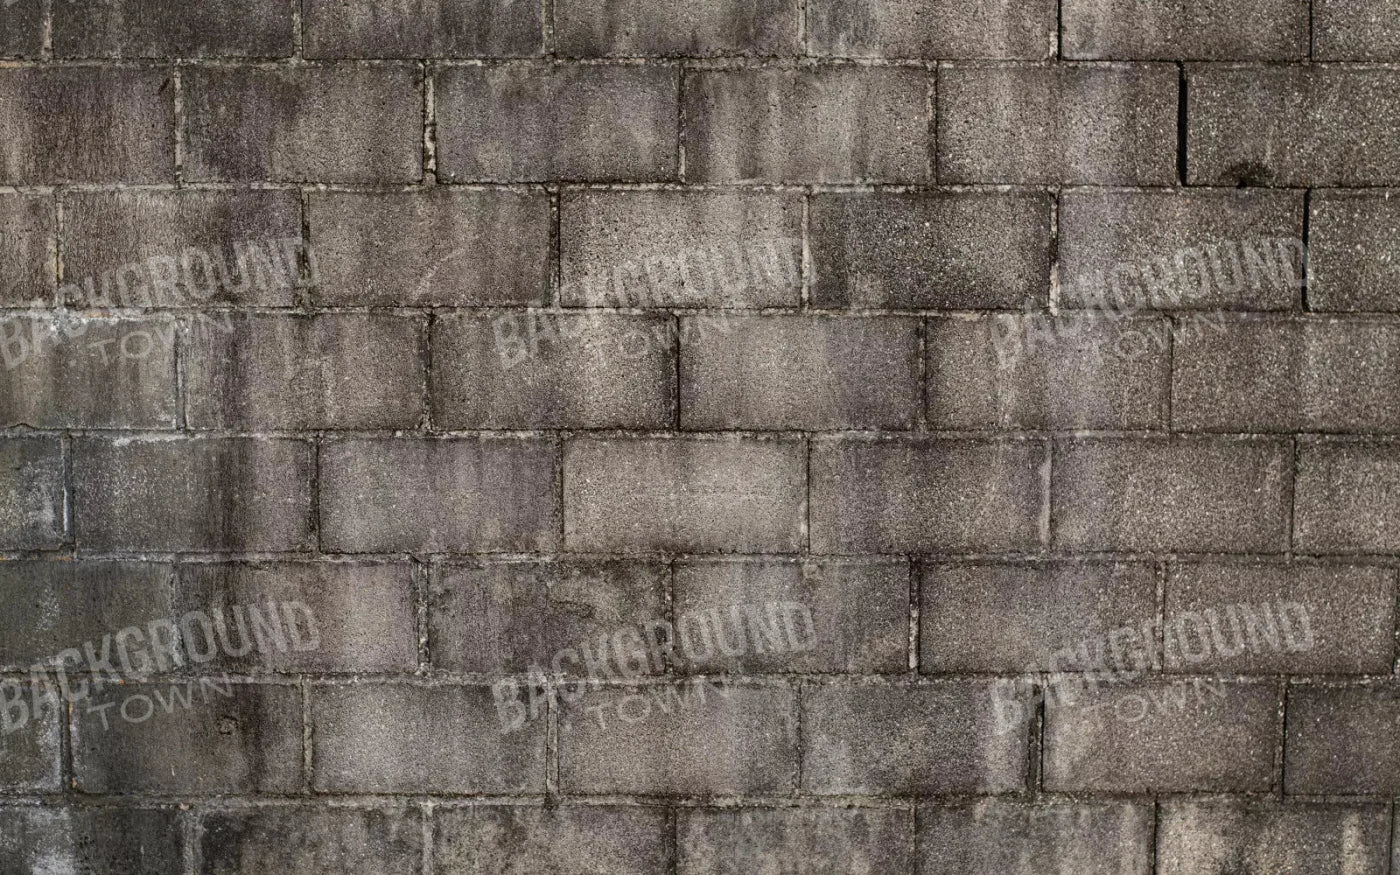 Weathered Cinderblock Wall 14X9 Ultracloth ( 168 X 108 Inch ) Backdrop